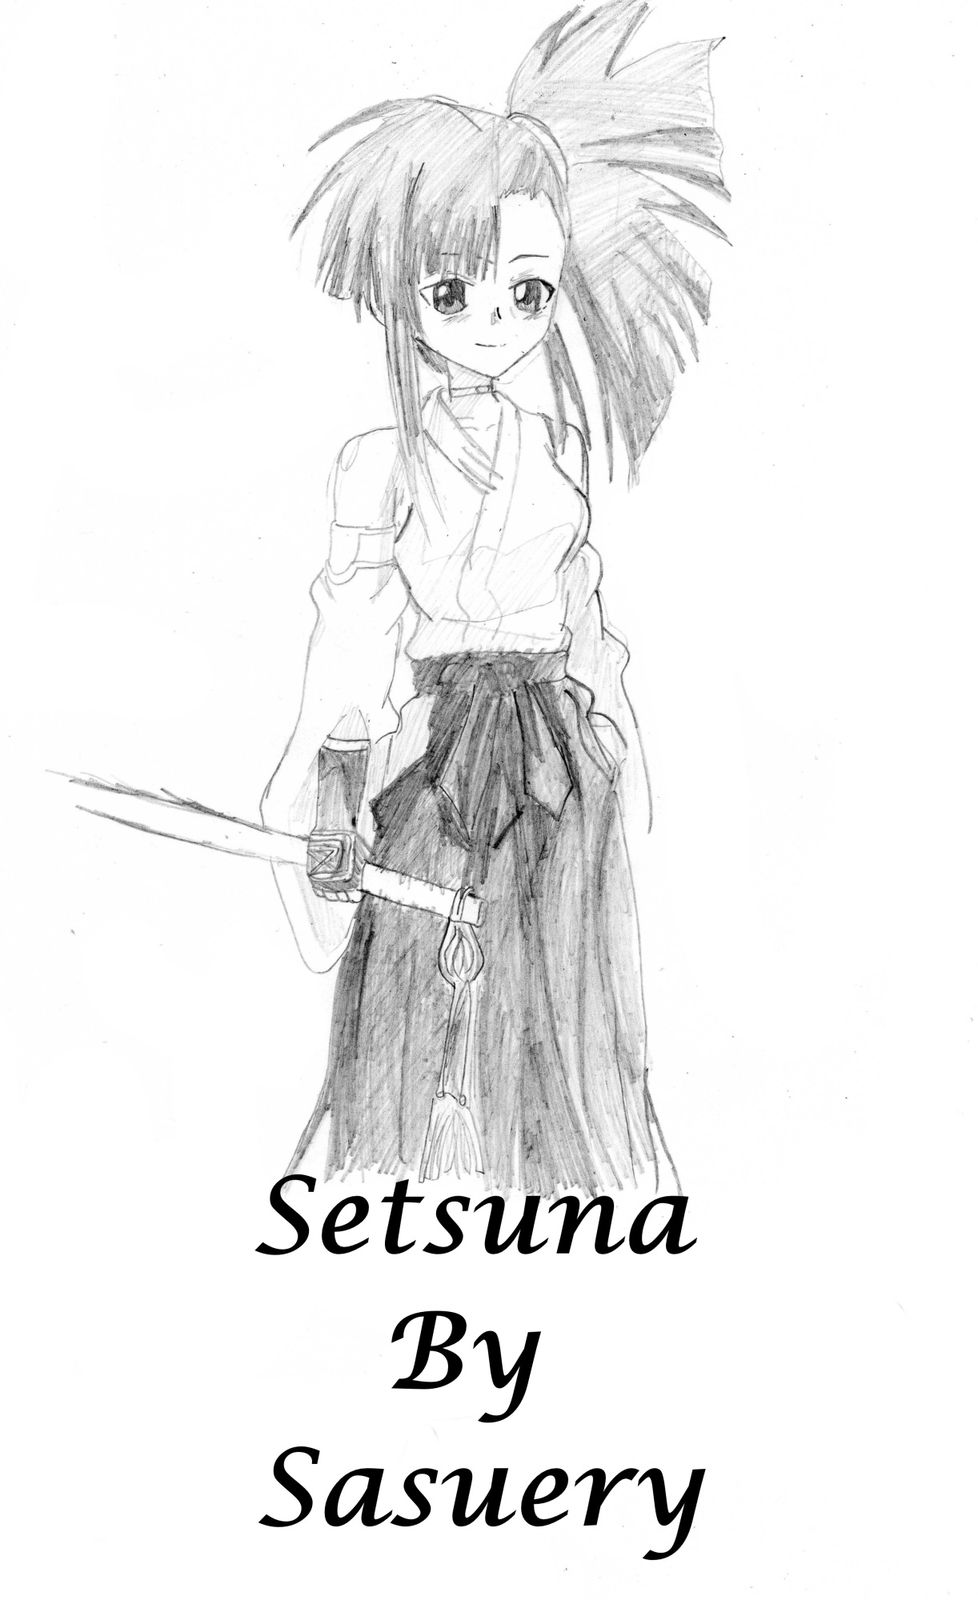 Setsuna by sasuery